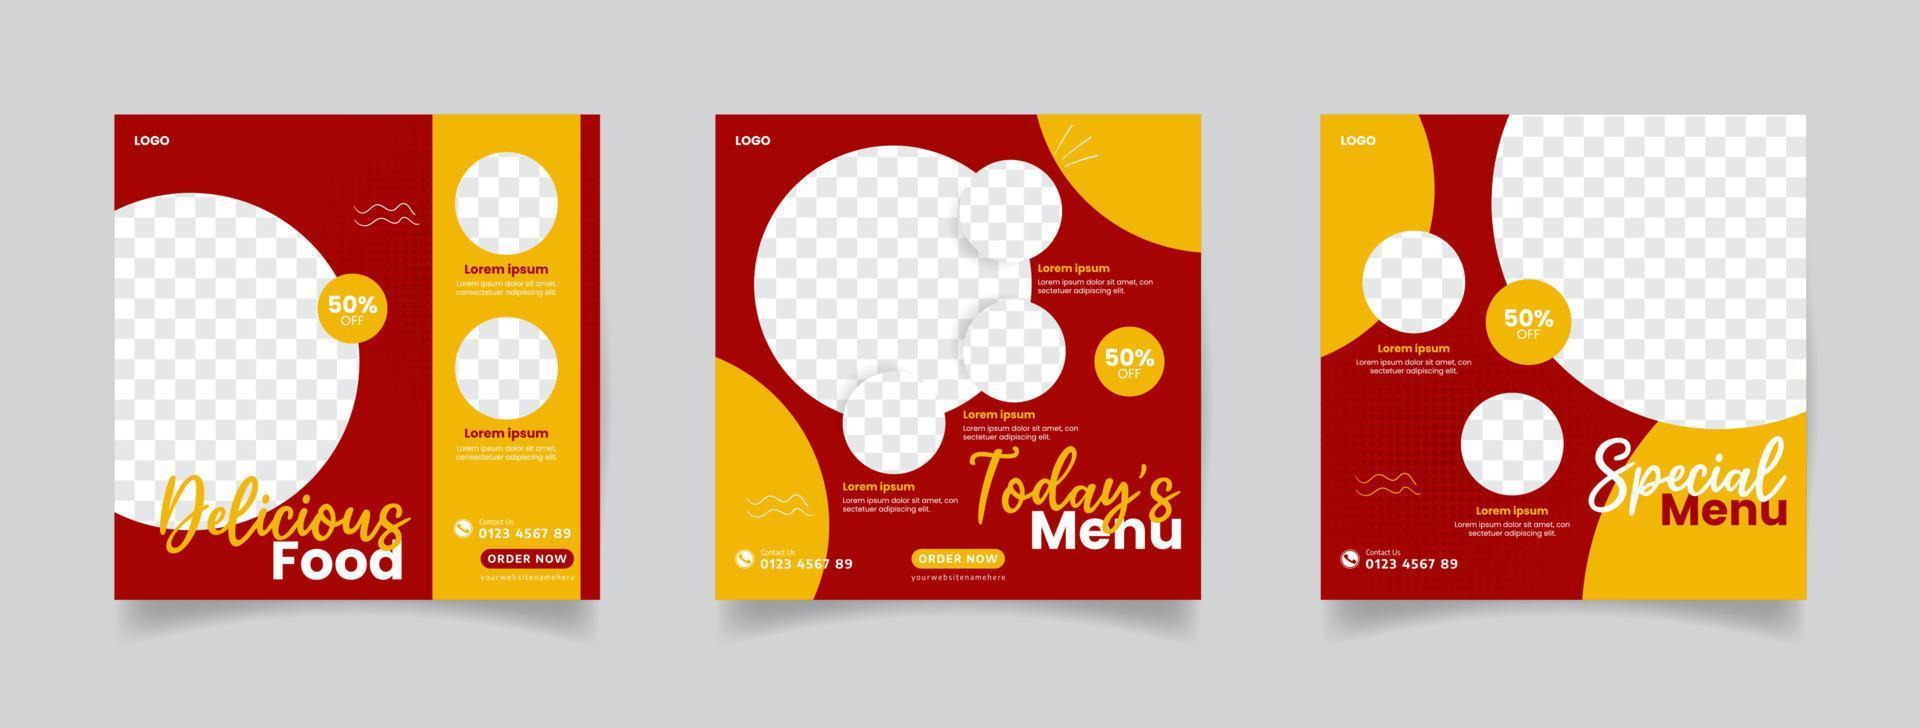 social media post or web banner template for food restaurant business marketing vector